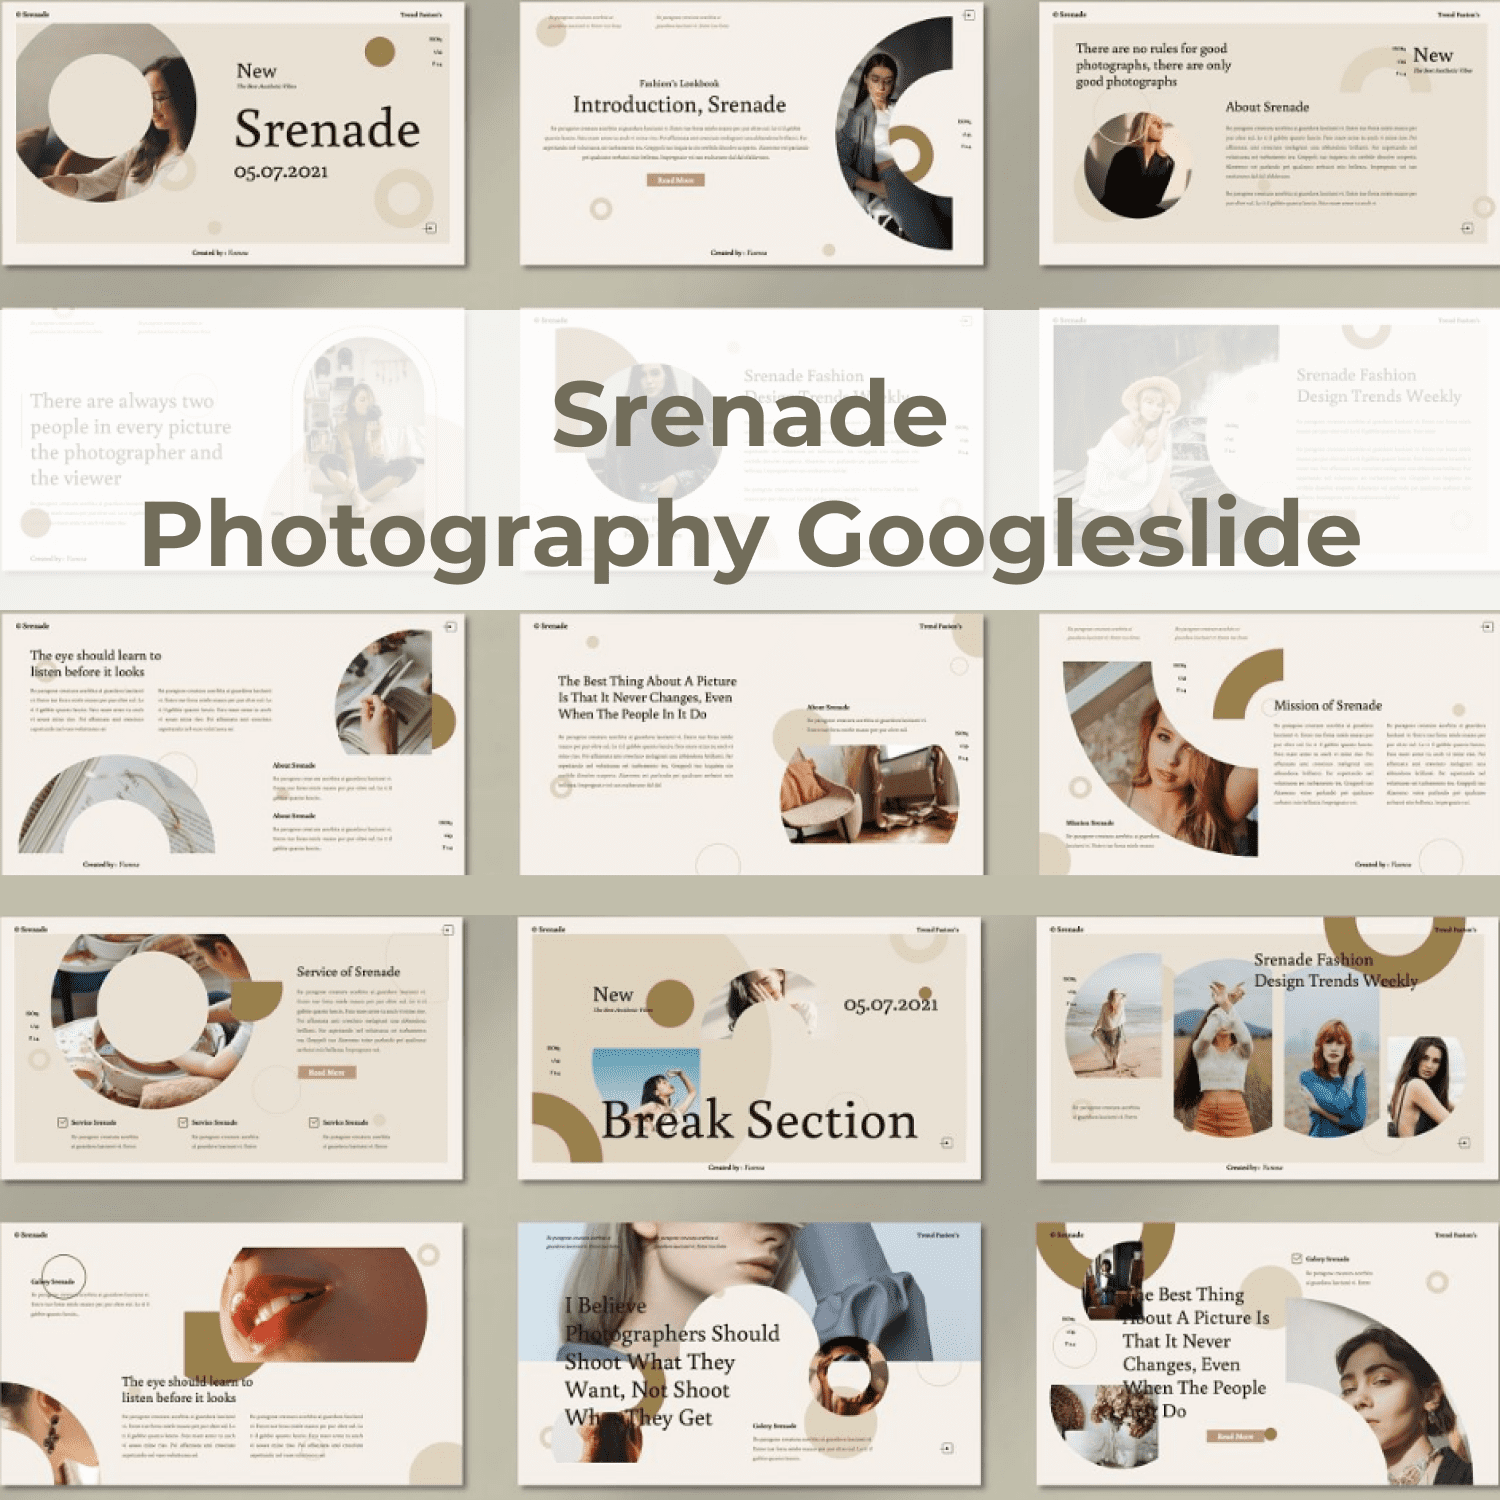 Srenade - Photography Googleslide cover iamge.